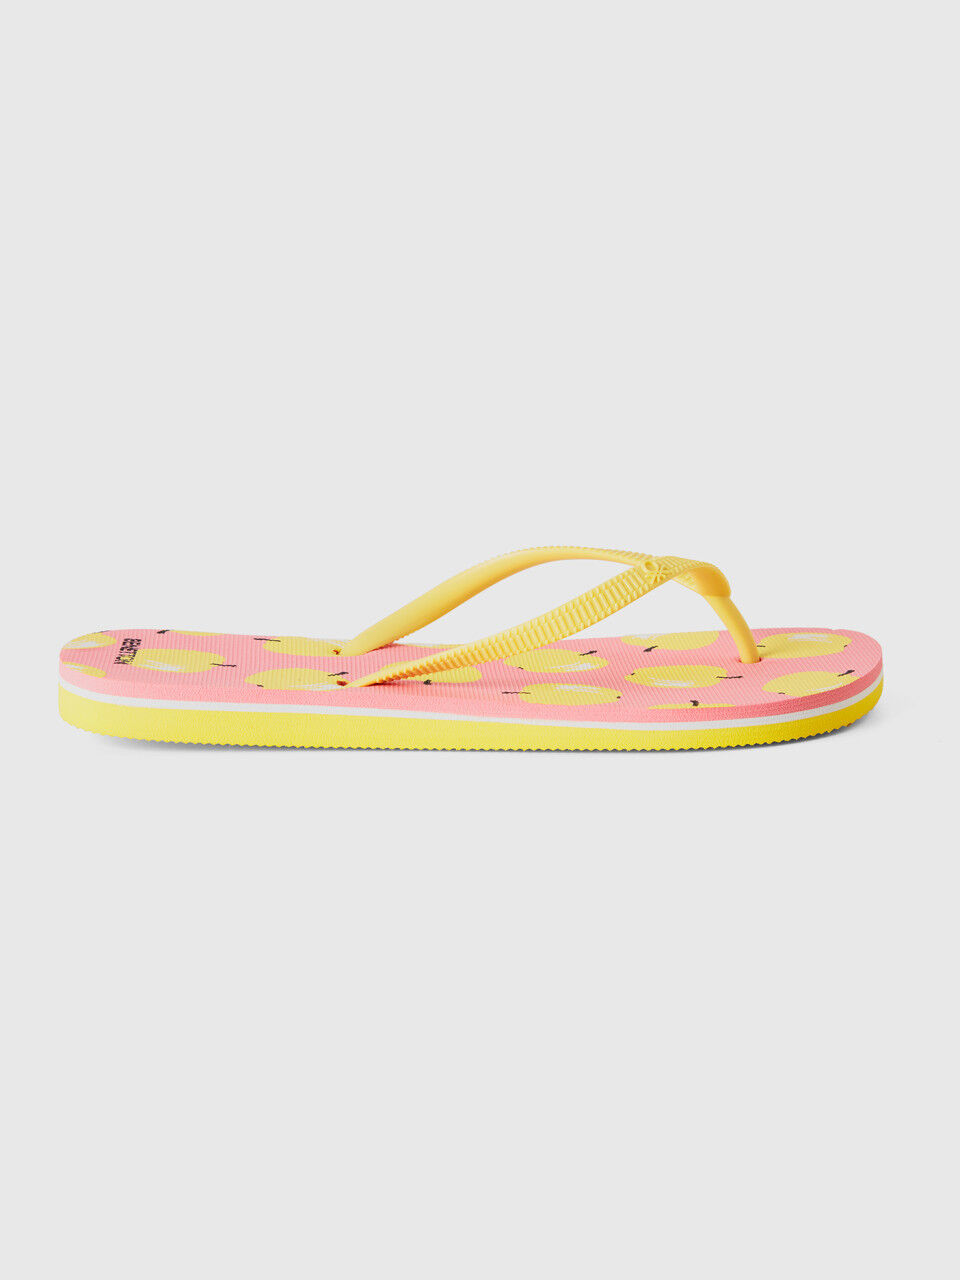 Pink flip flops with apple pattern